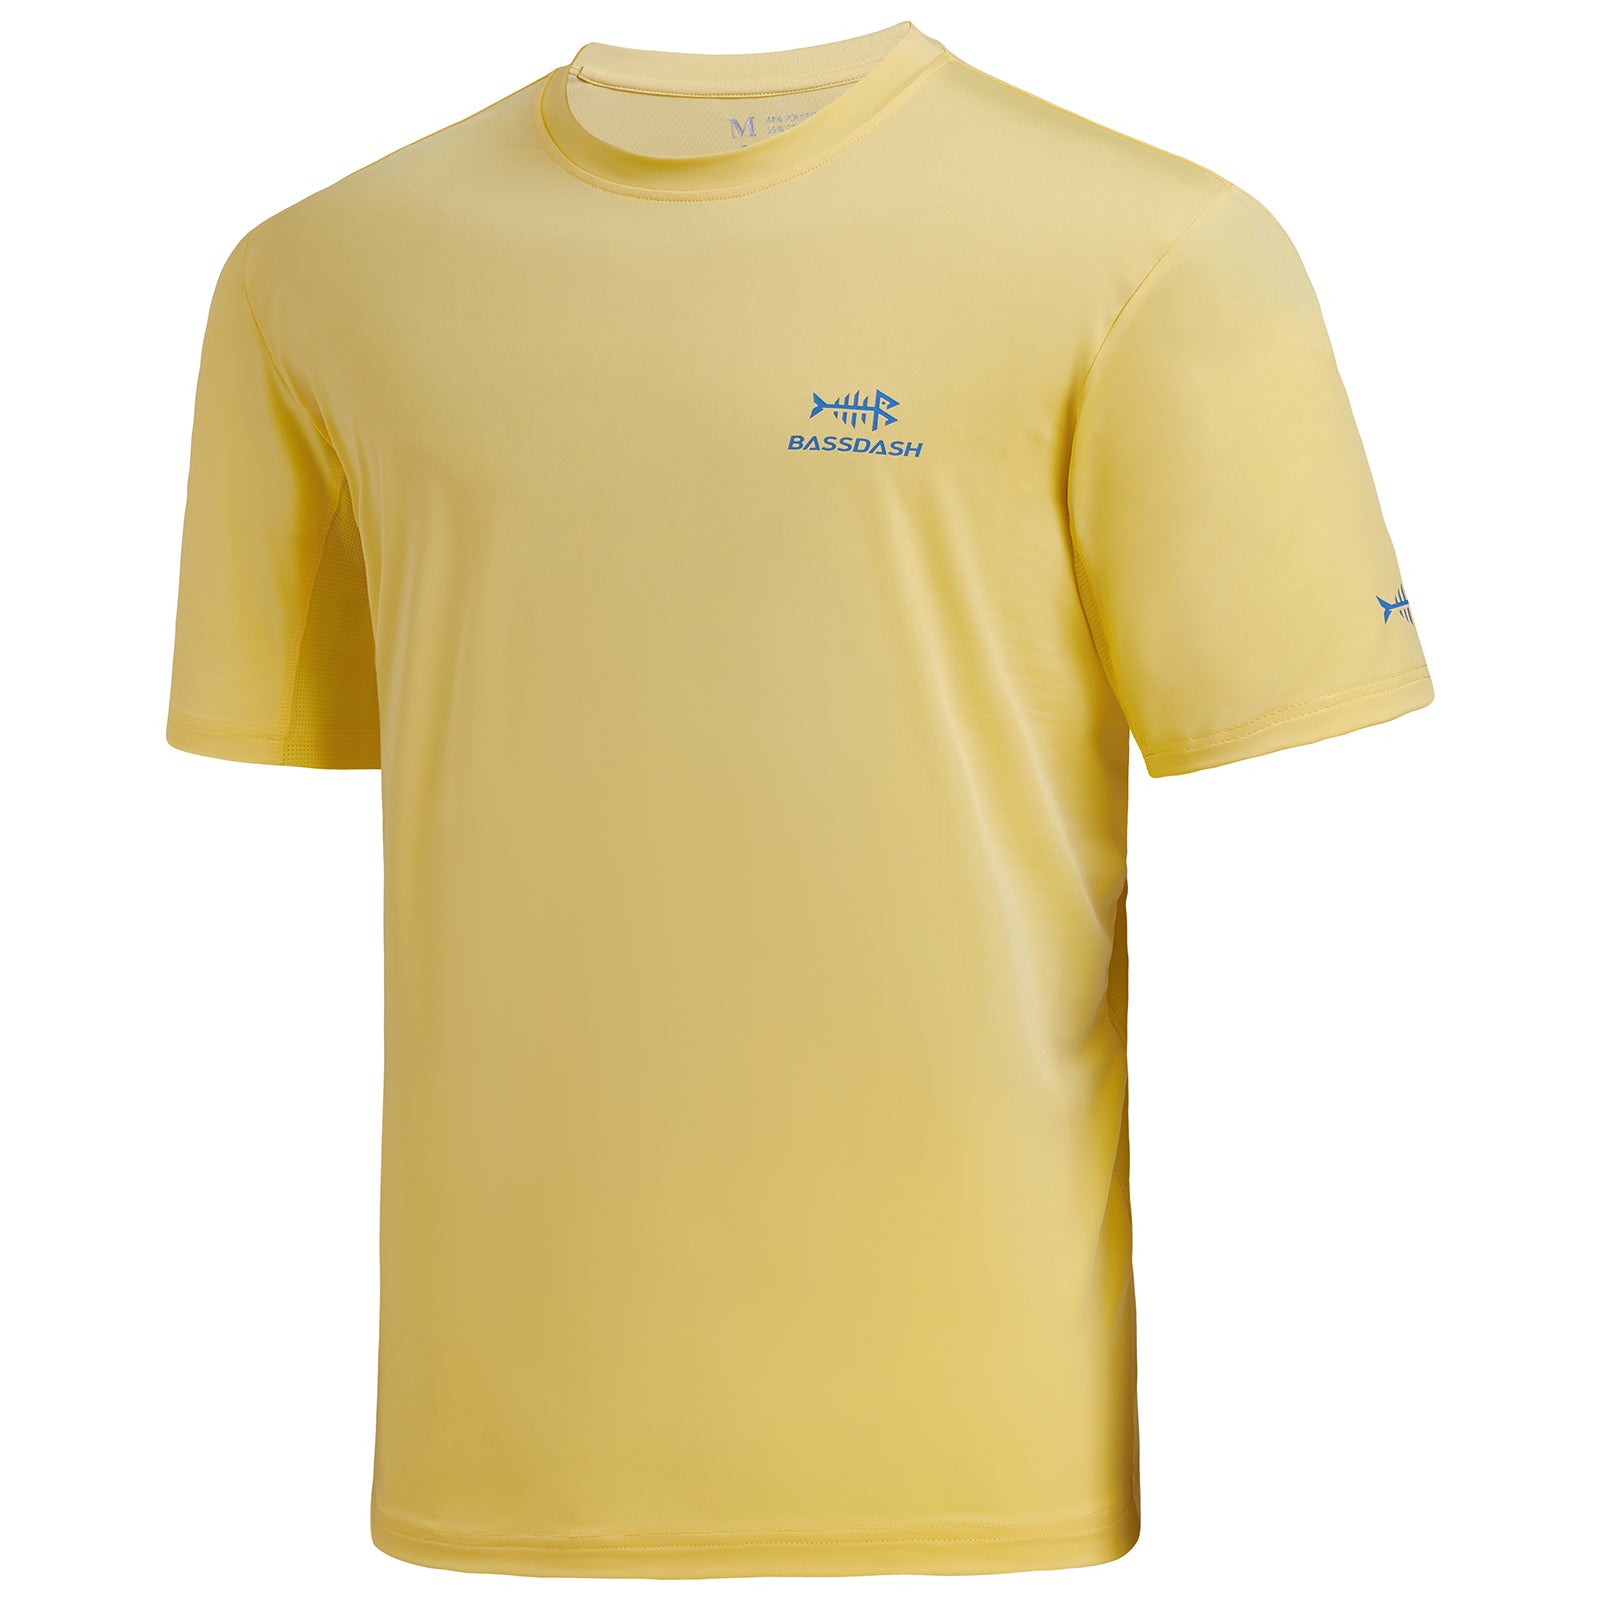 Bassdash Men’s UPF 50+ Performance Fishing T-Shirt Quick Dry Short Sleeve Active Shirt, Light Yellow/Vivid Blue Logo / 4XL